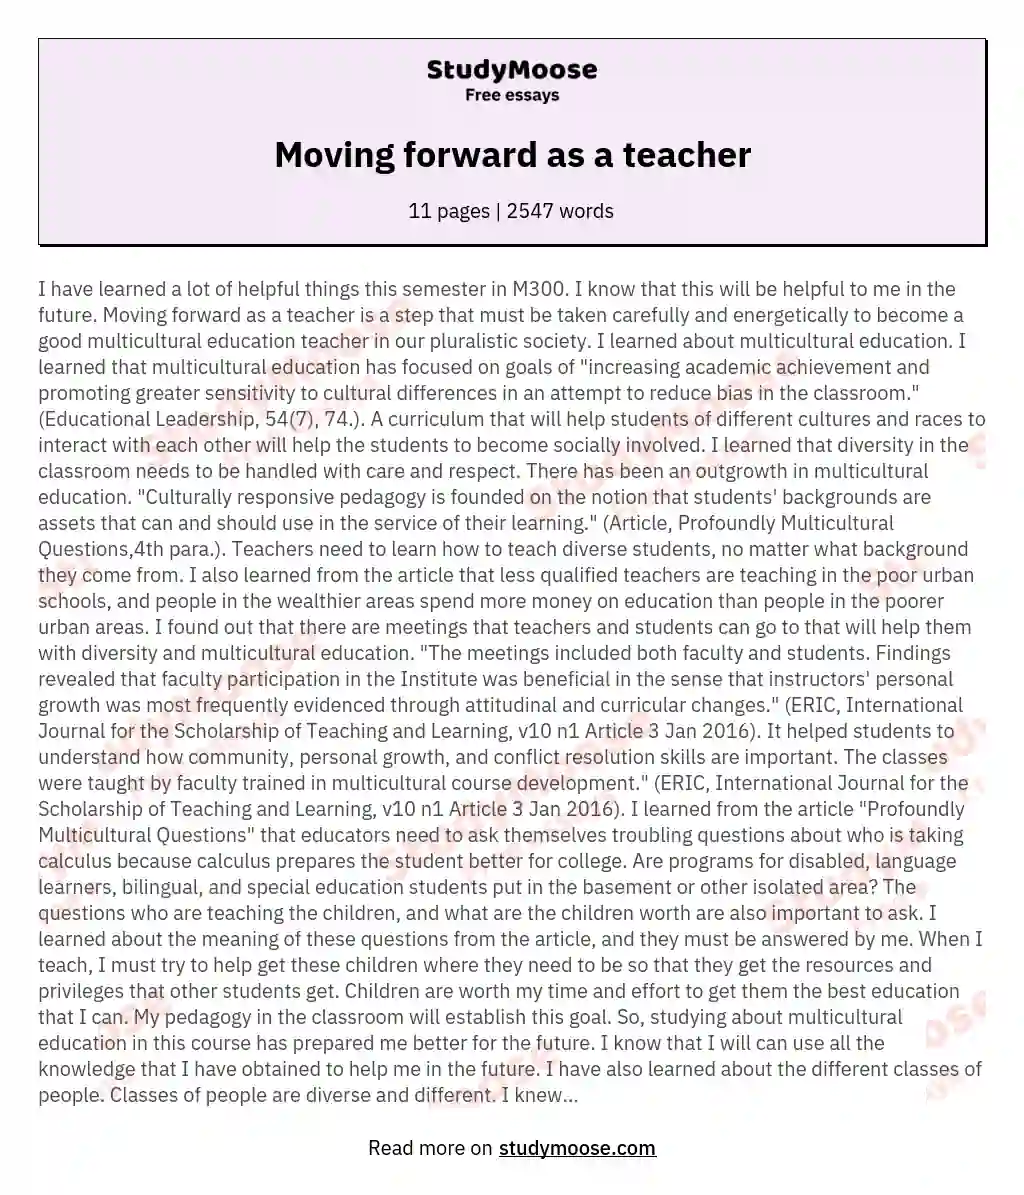 Moving forward as a teacher essay